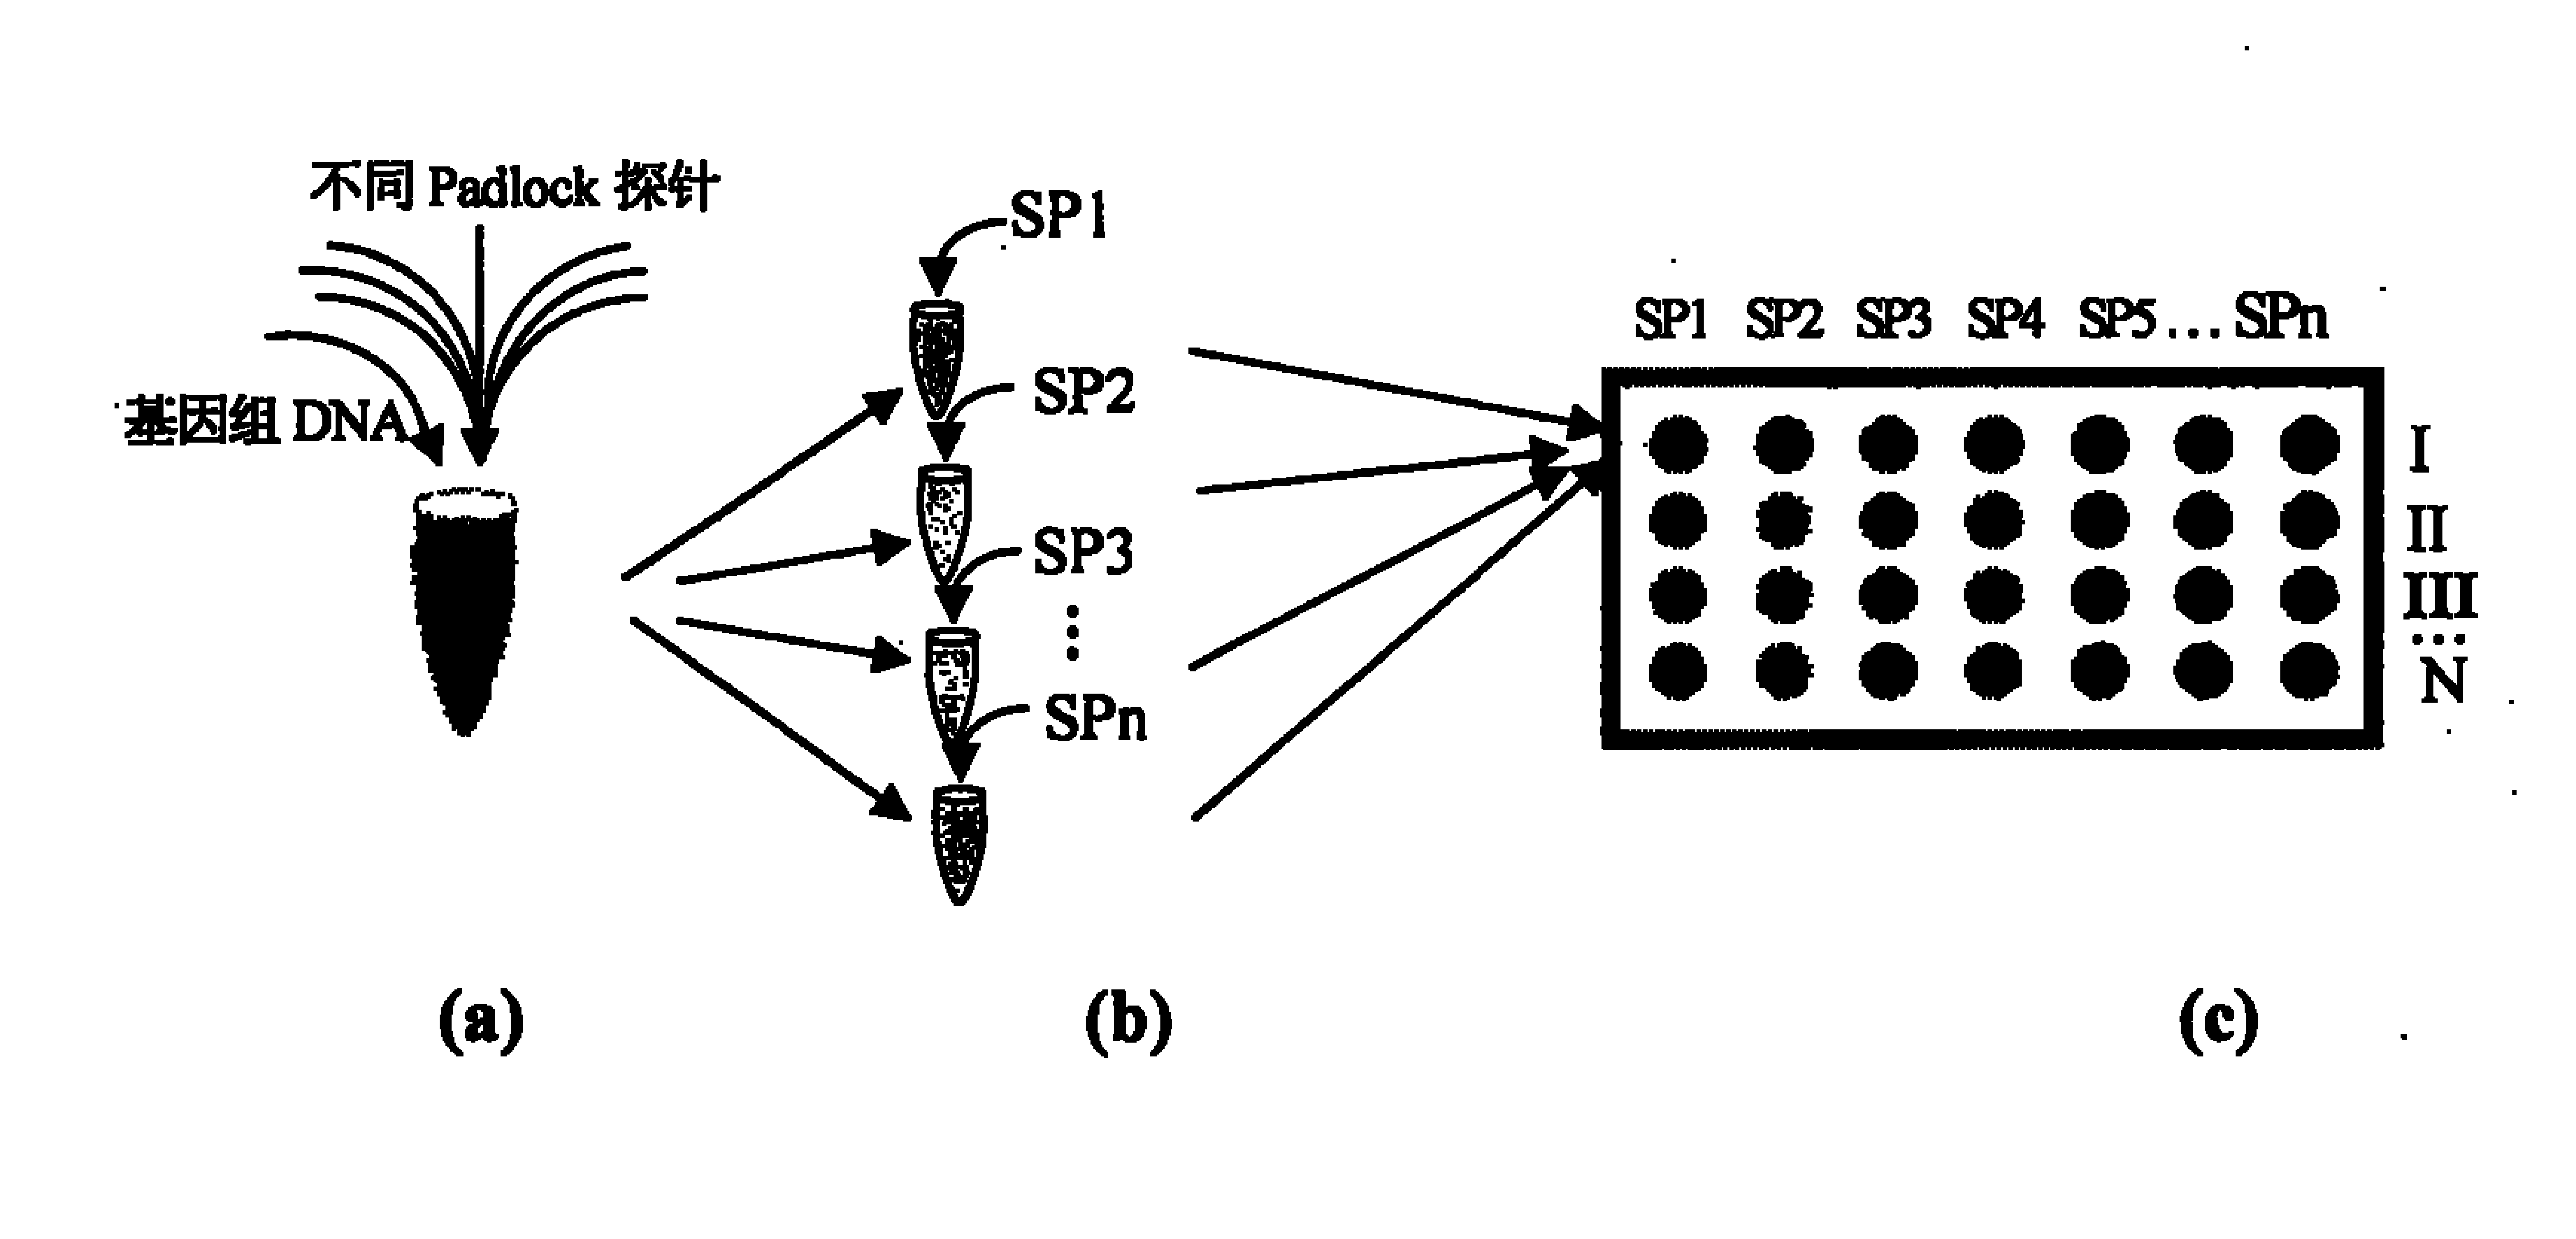 Multi-sample multi-site SNP detection method